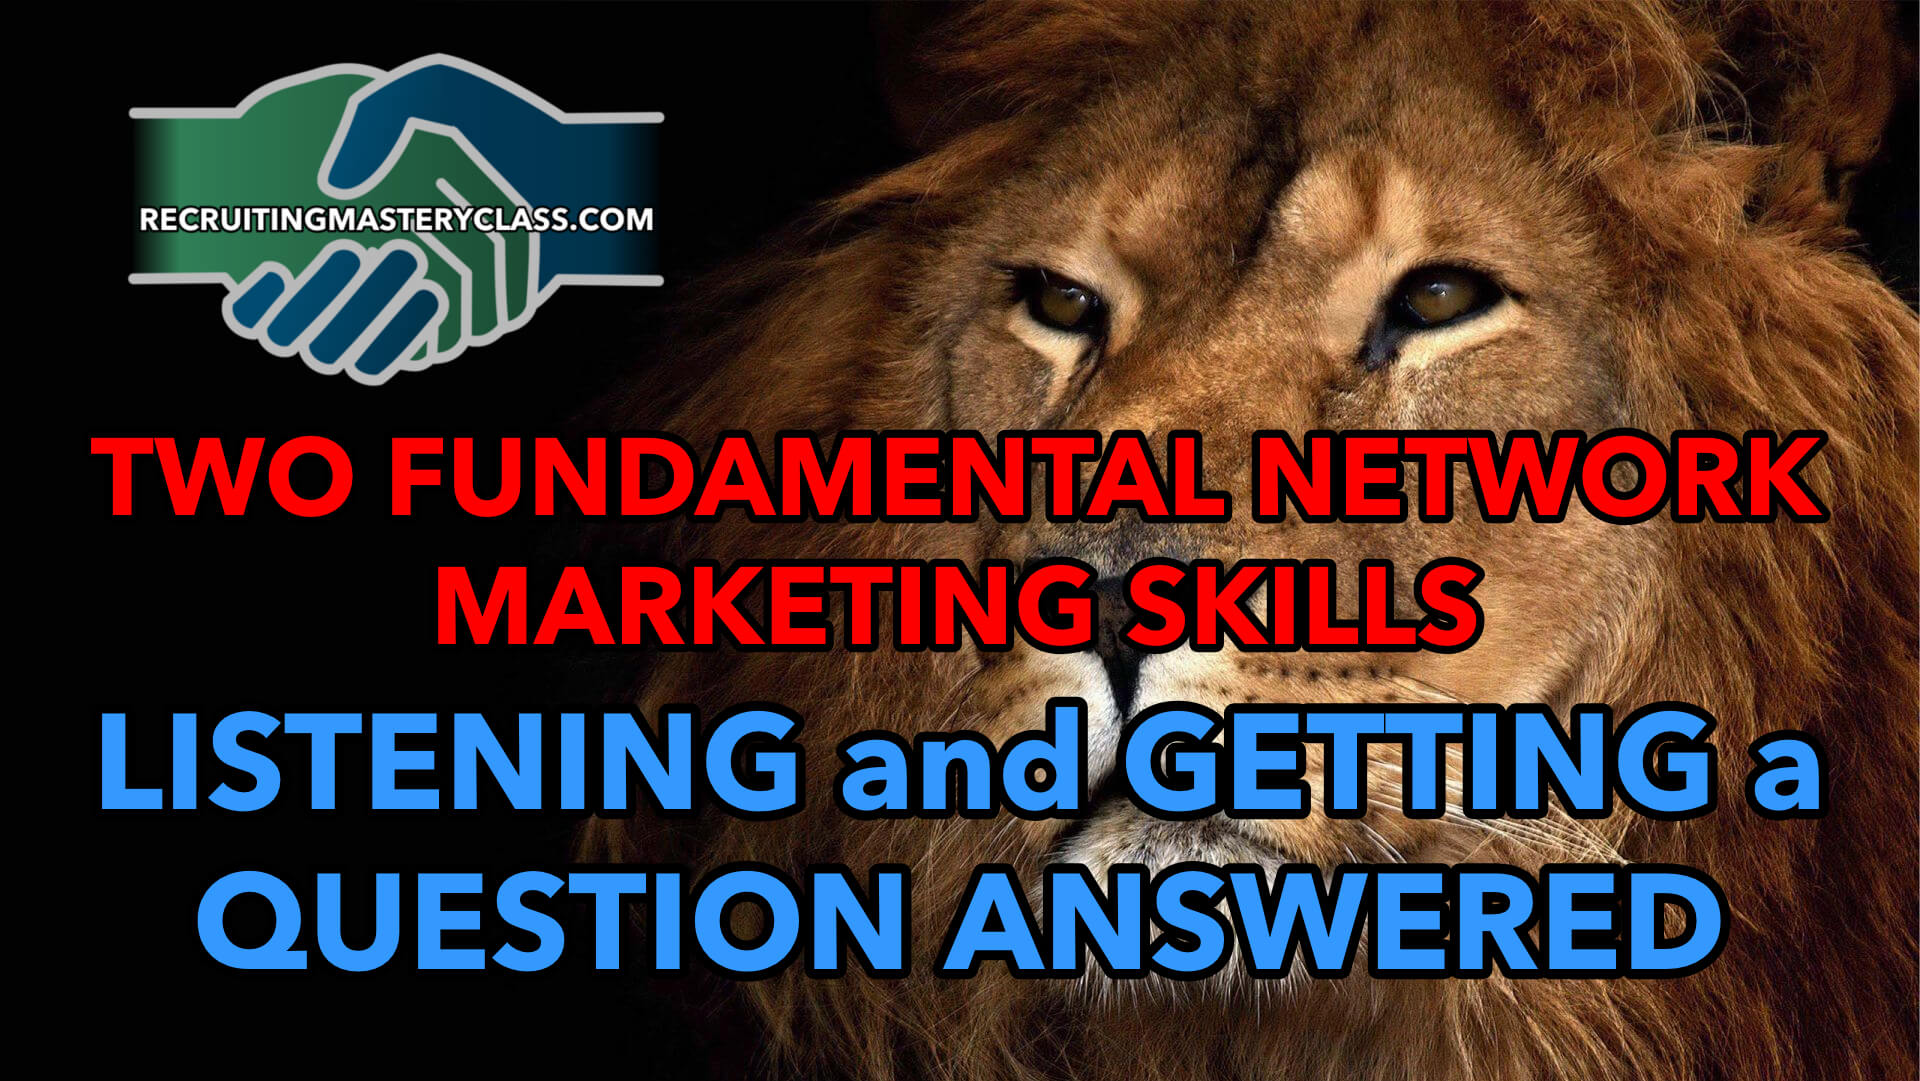 Fundamental Network Marketing Skills: Getting A Question Answered